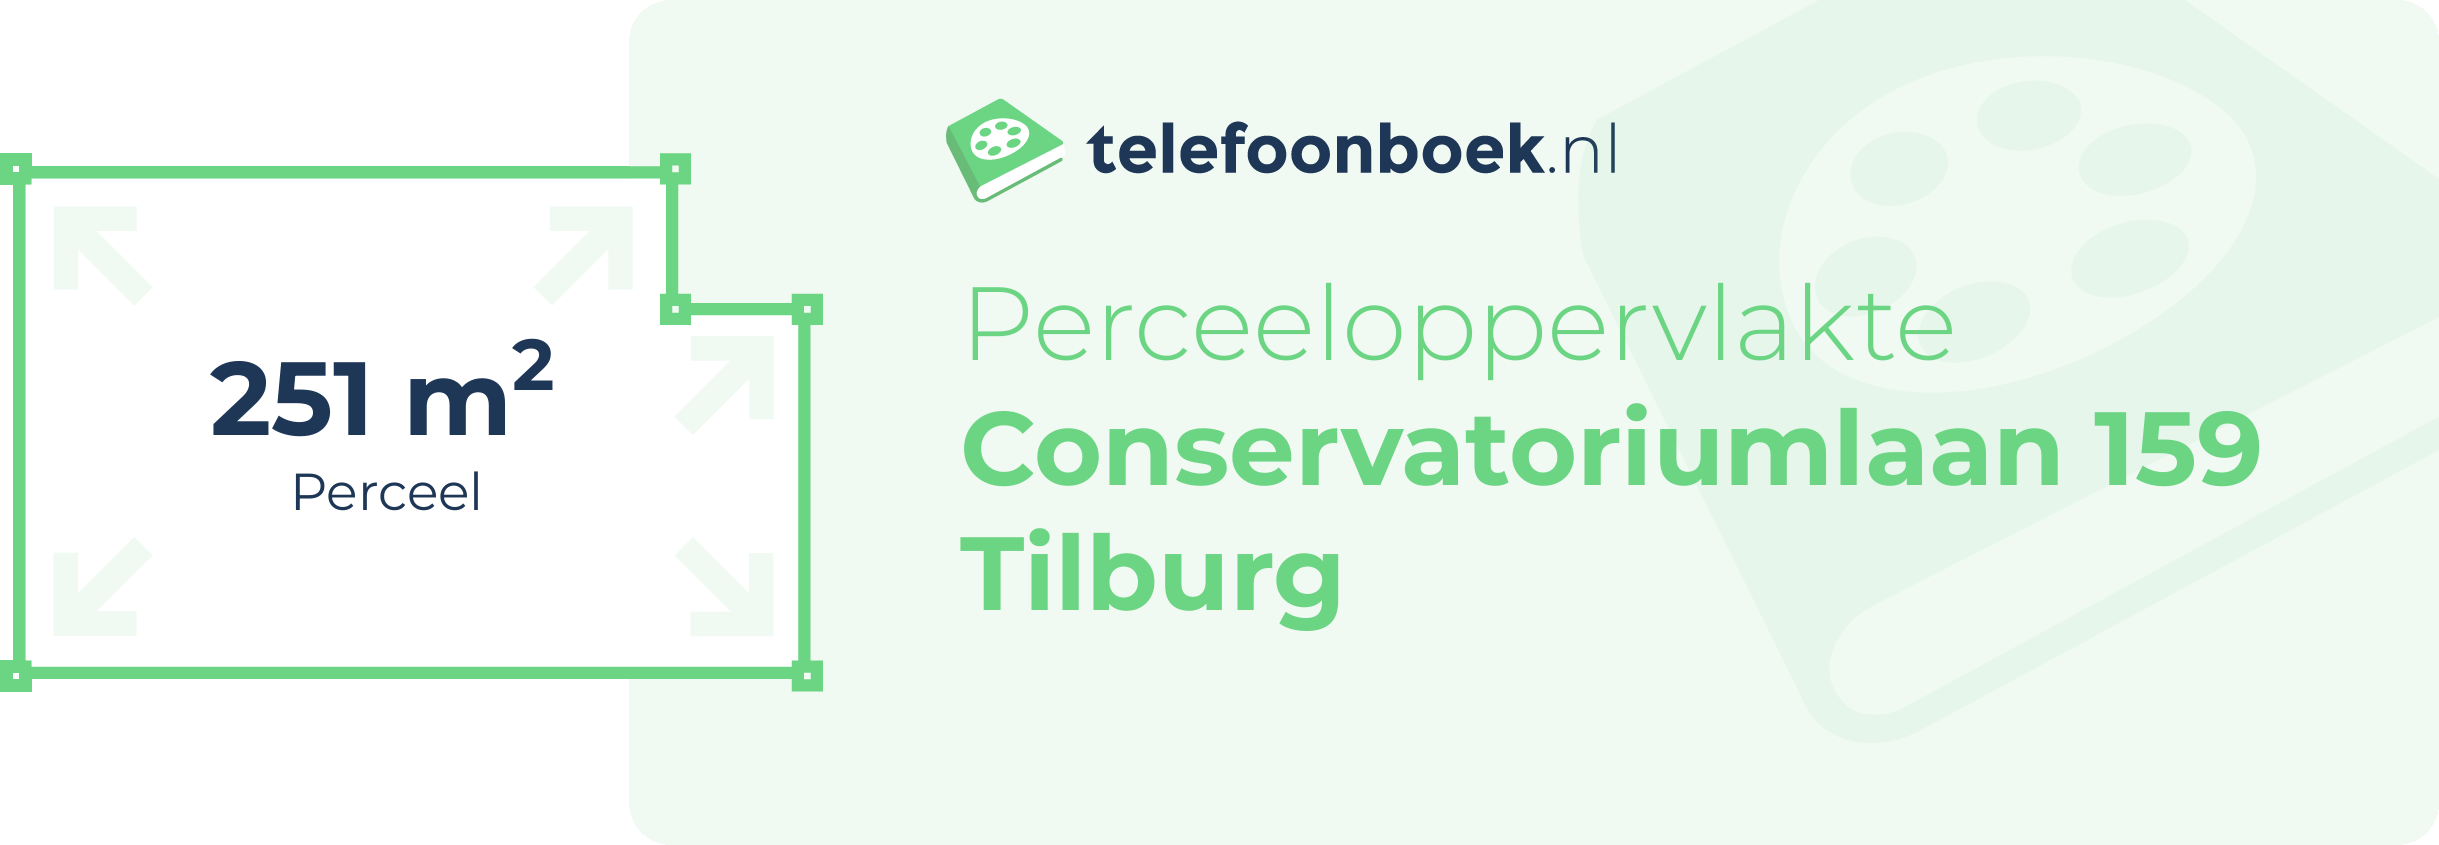 Perceeloppervlakte Conservatoriumlaan 159 Tilburg